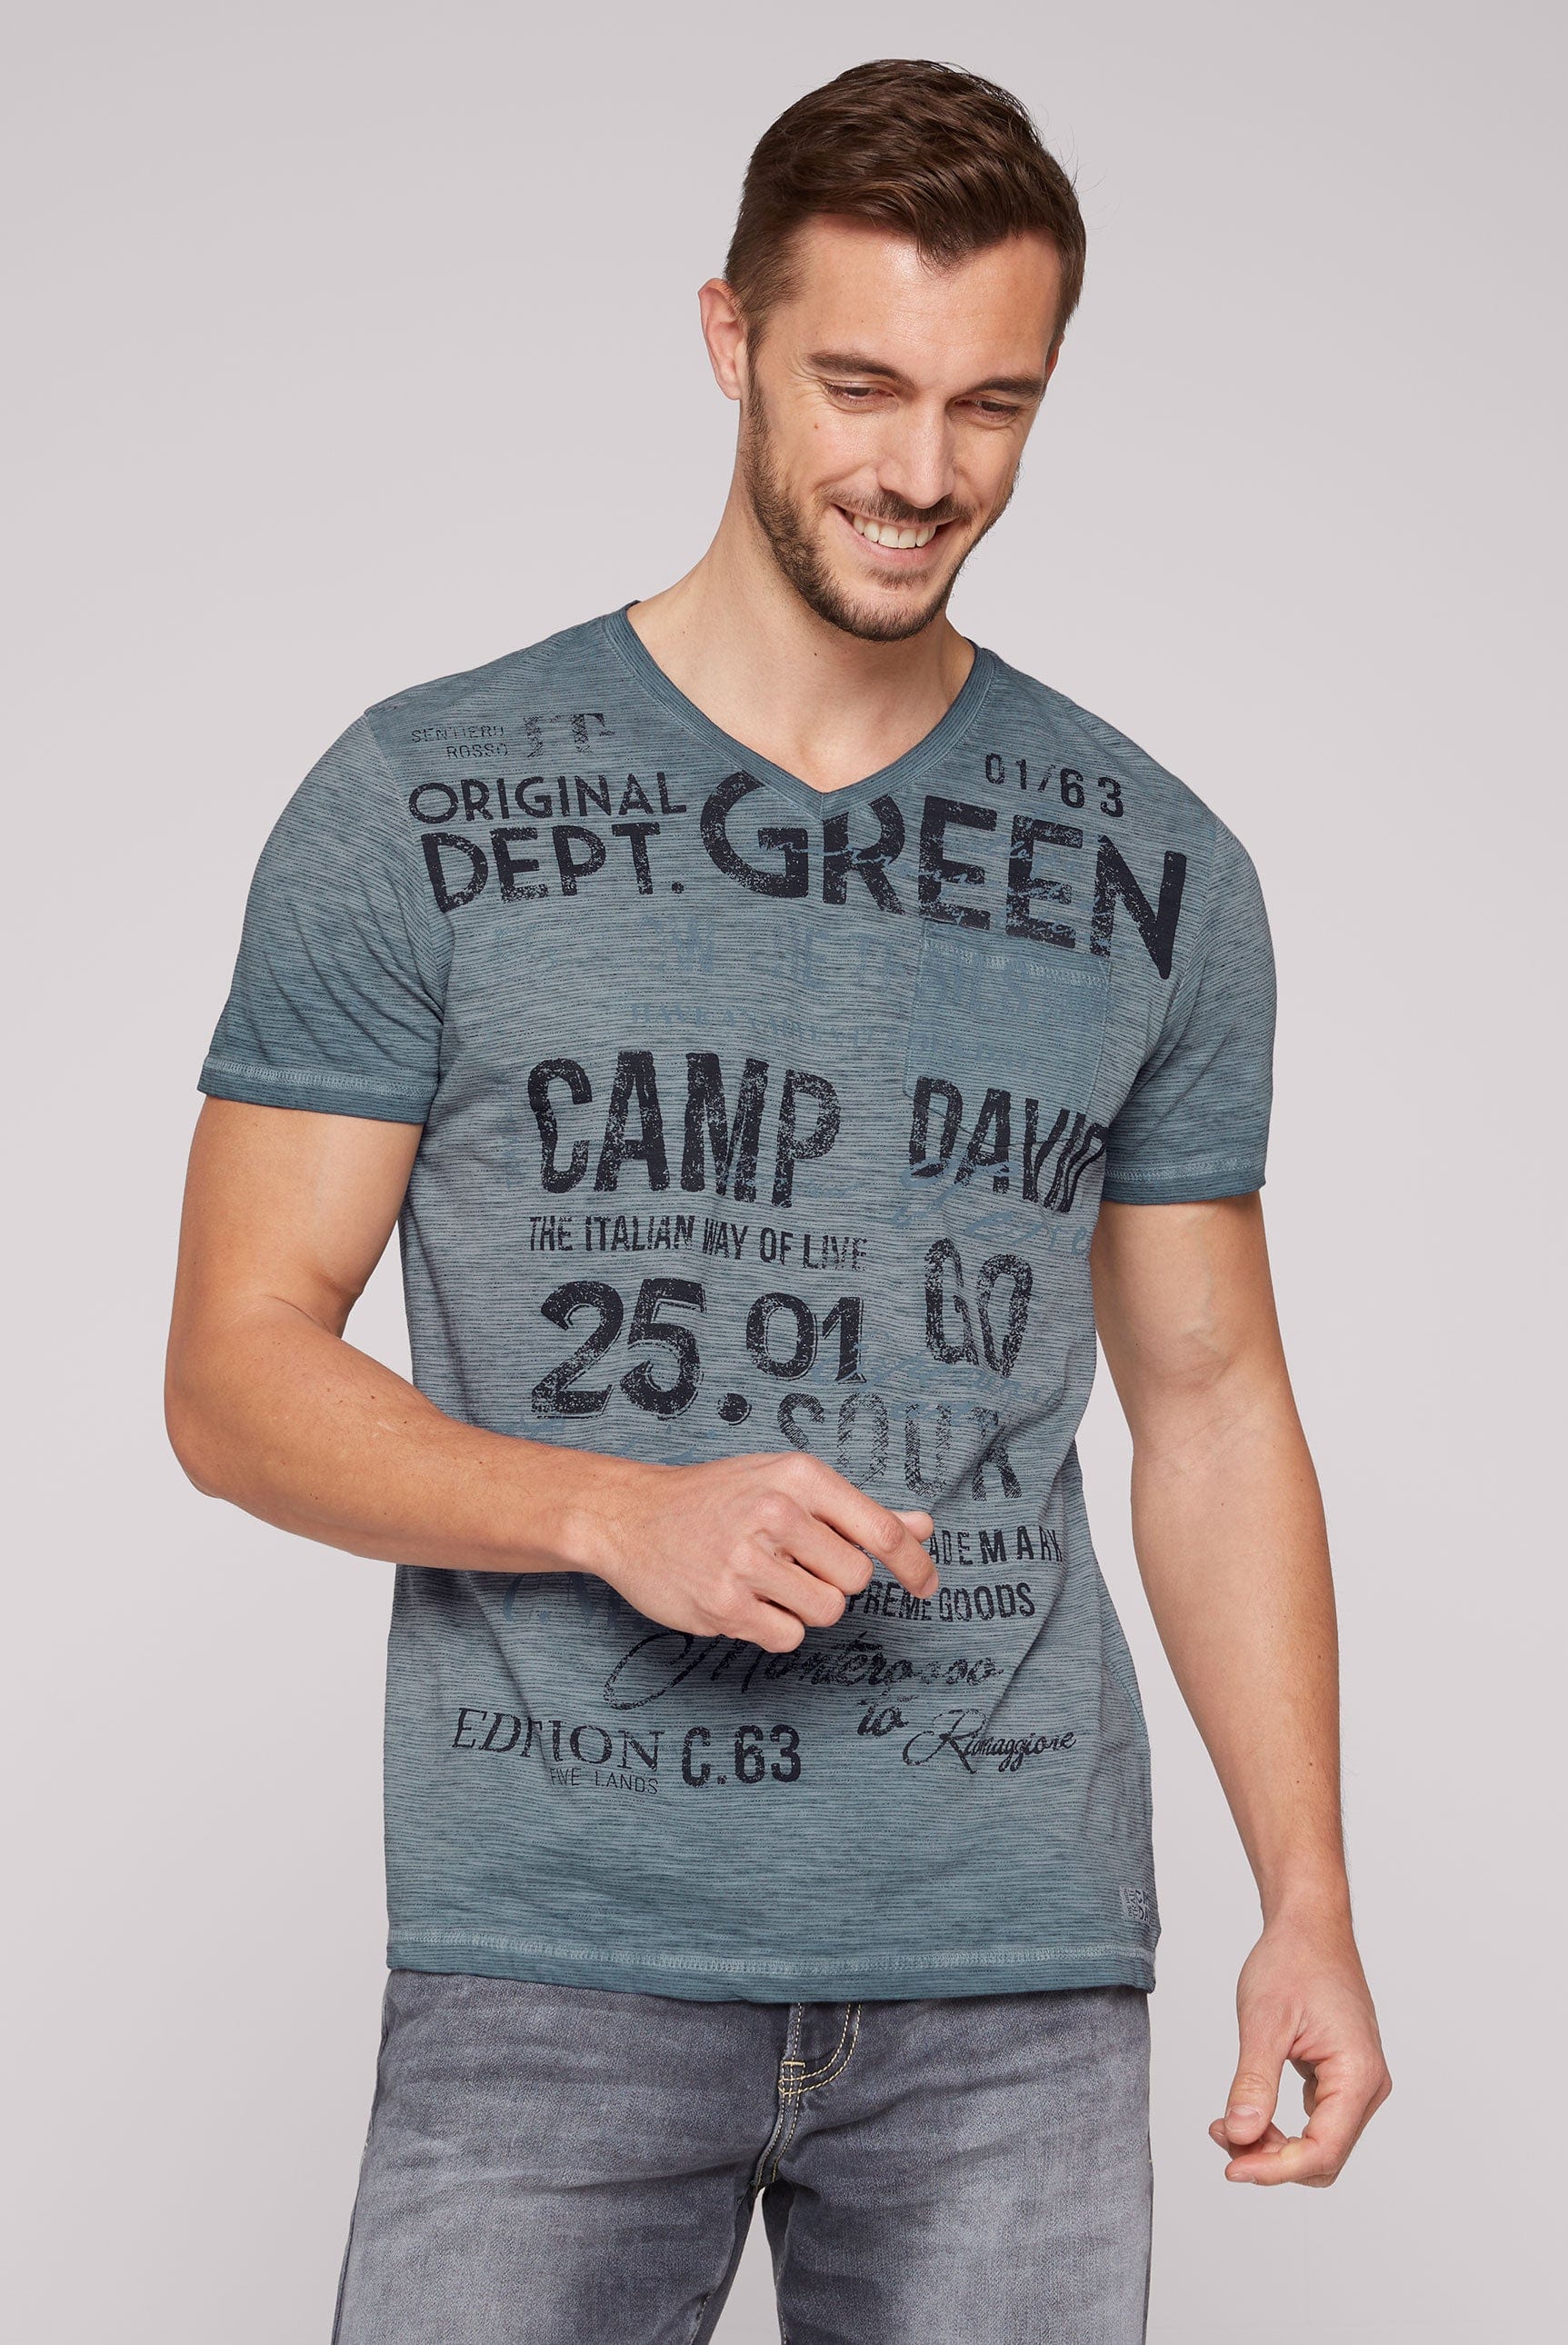 Camp Quality David Fashion and T-Shirts: | Versatility Stateshop